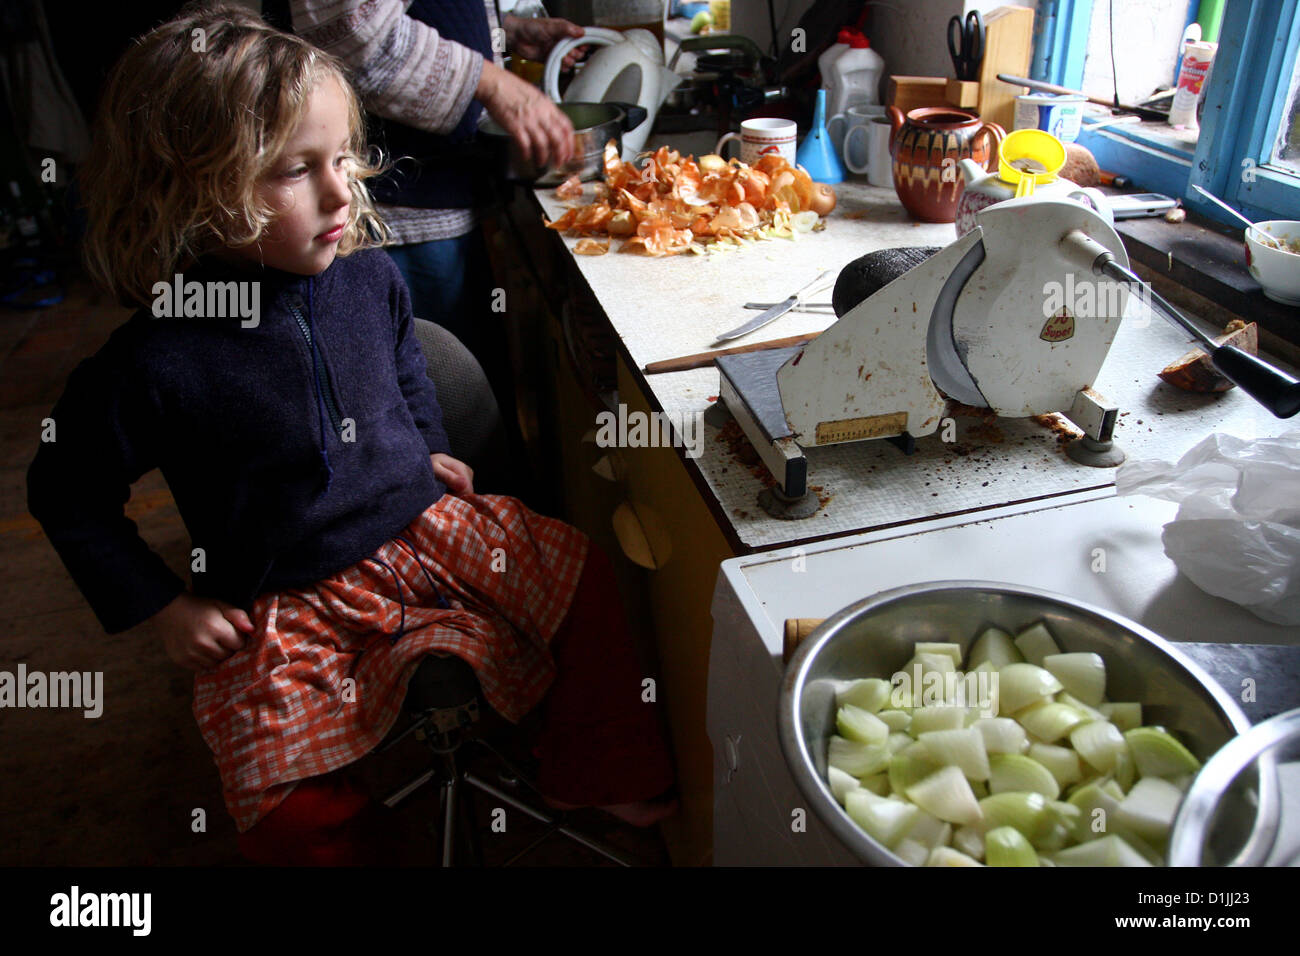 https://c8.alamy.com/comp/D1JJ23/portrait-of-the-blond-child-in-a-rural-kitchenold-mechanical-bread-D1JJ23.jpg